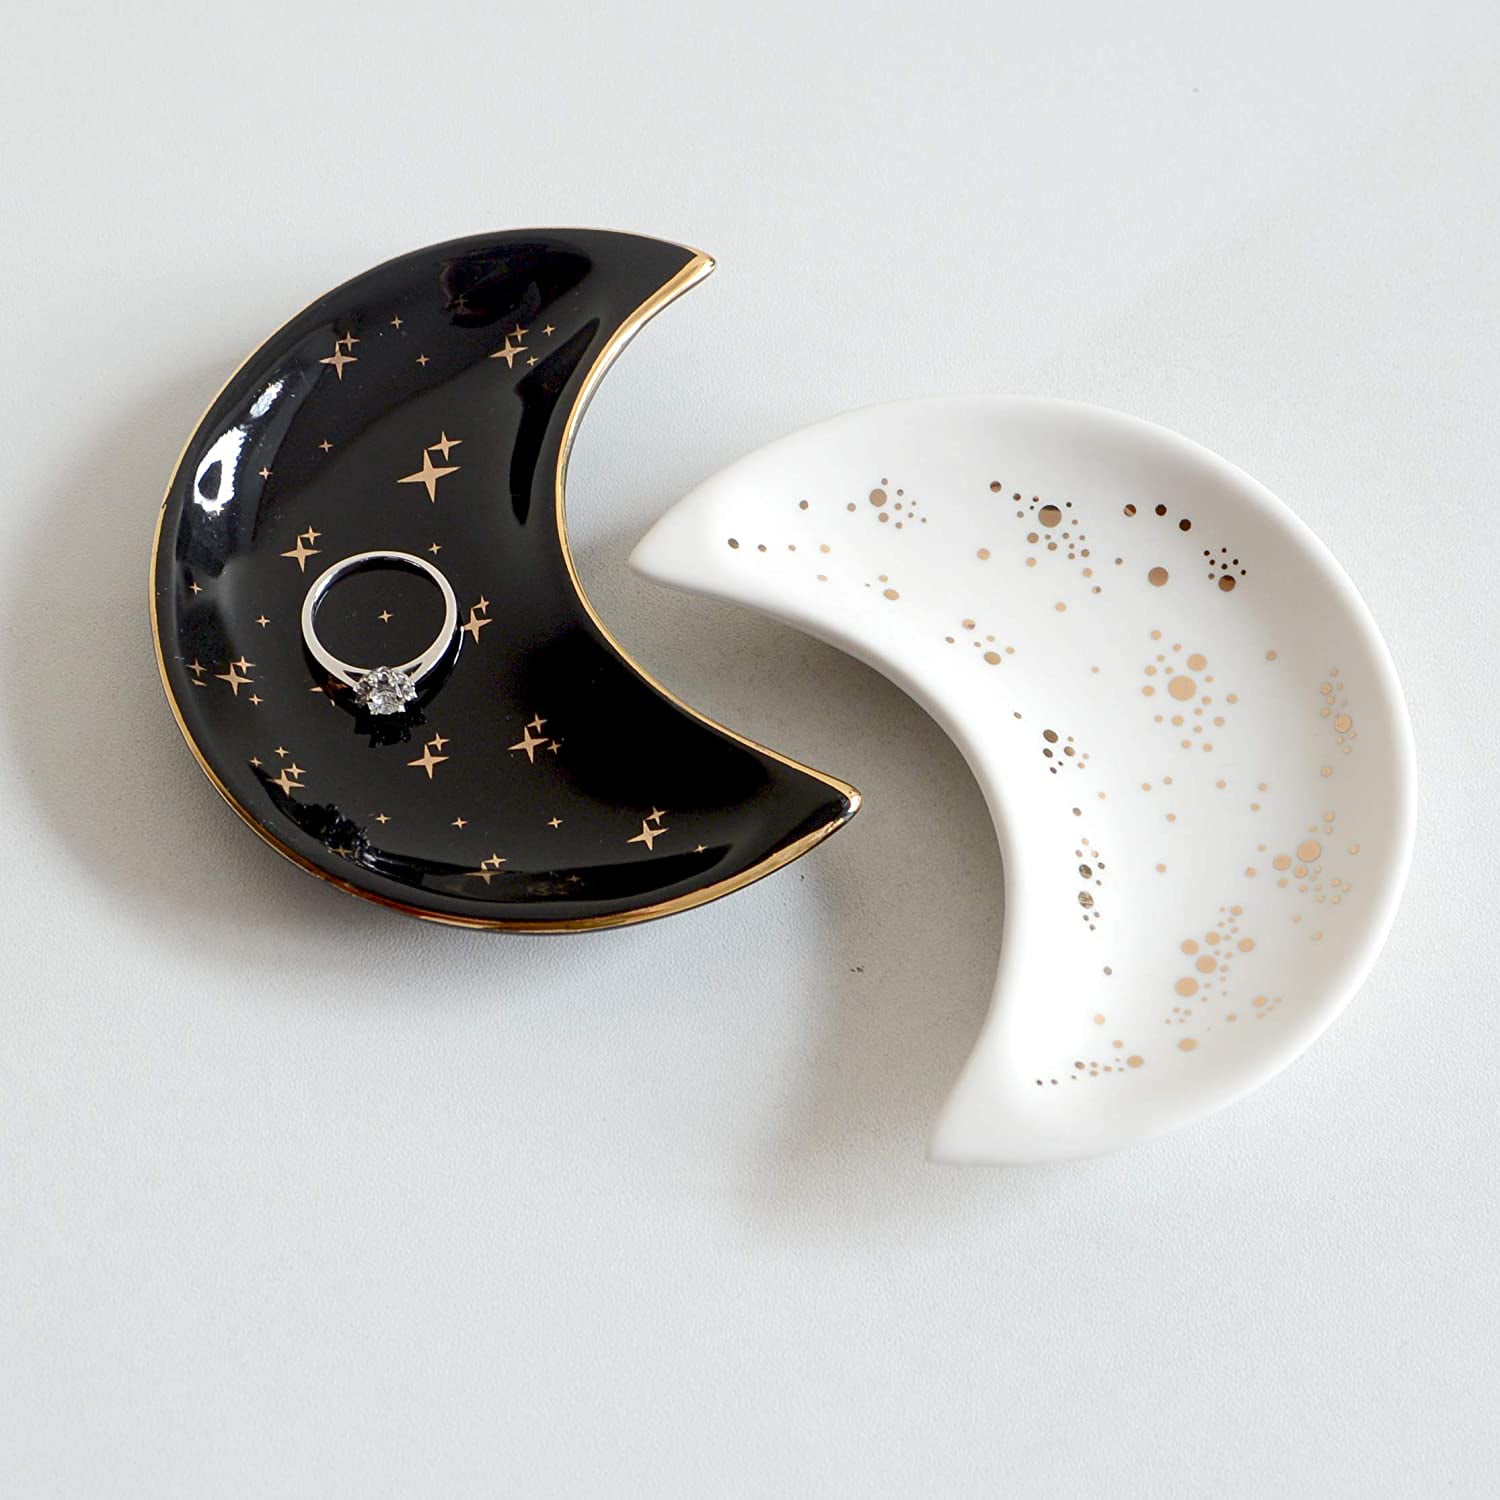 Jewelry Tray Dish Moon Shape Decorative Ceramic Trinket Dish Ring Dish Desk Organizer Accessories for Home Decor Blue and Black